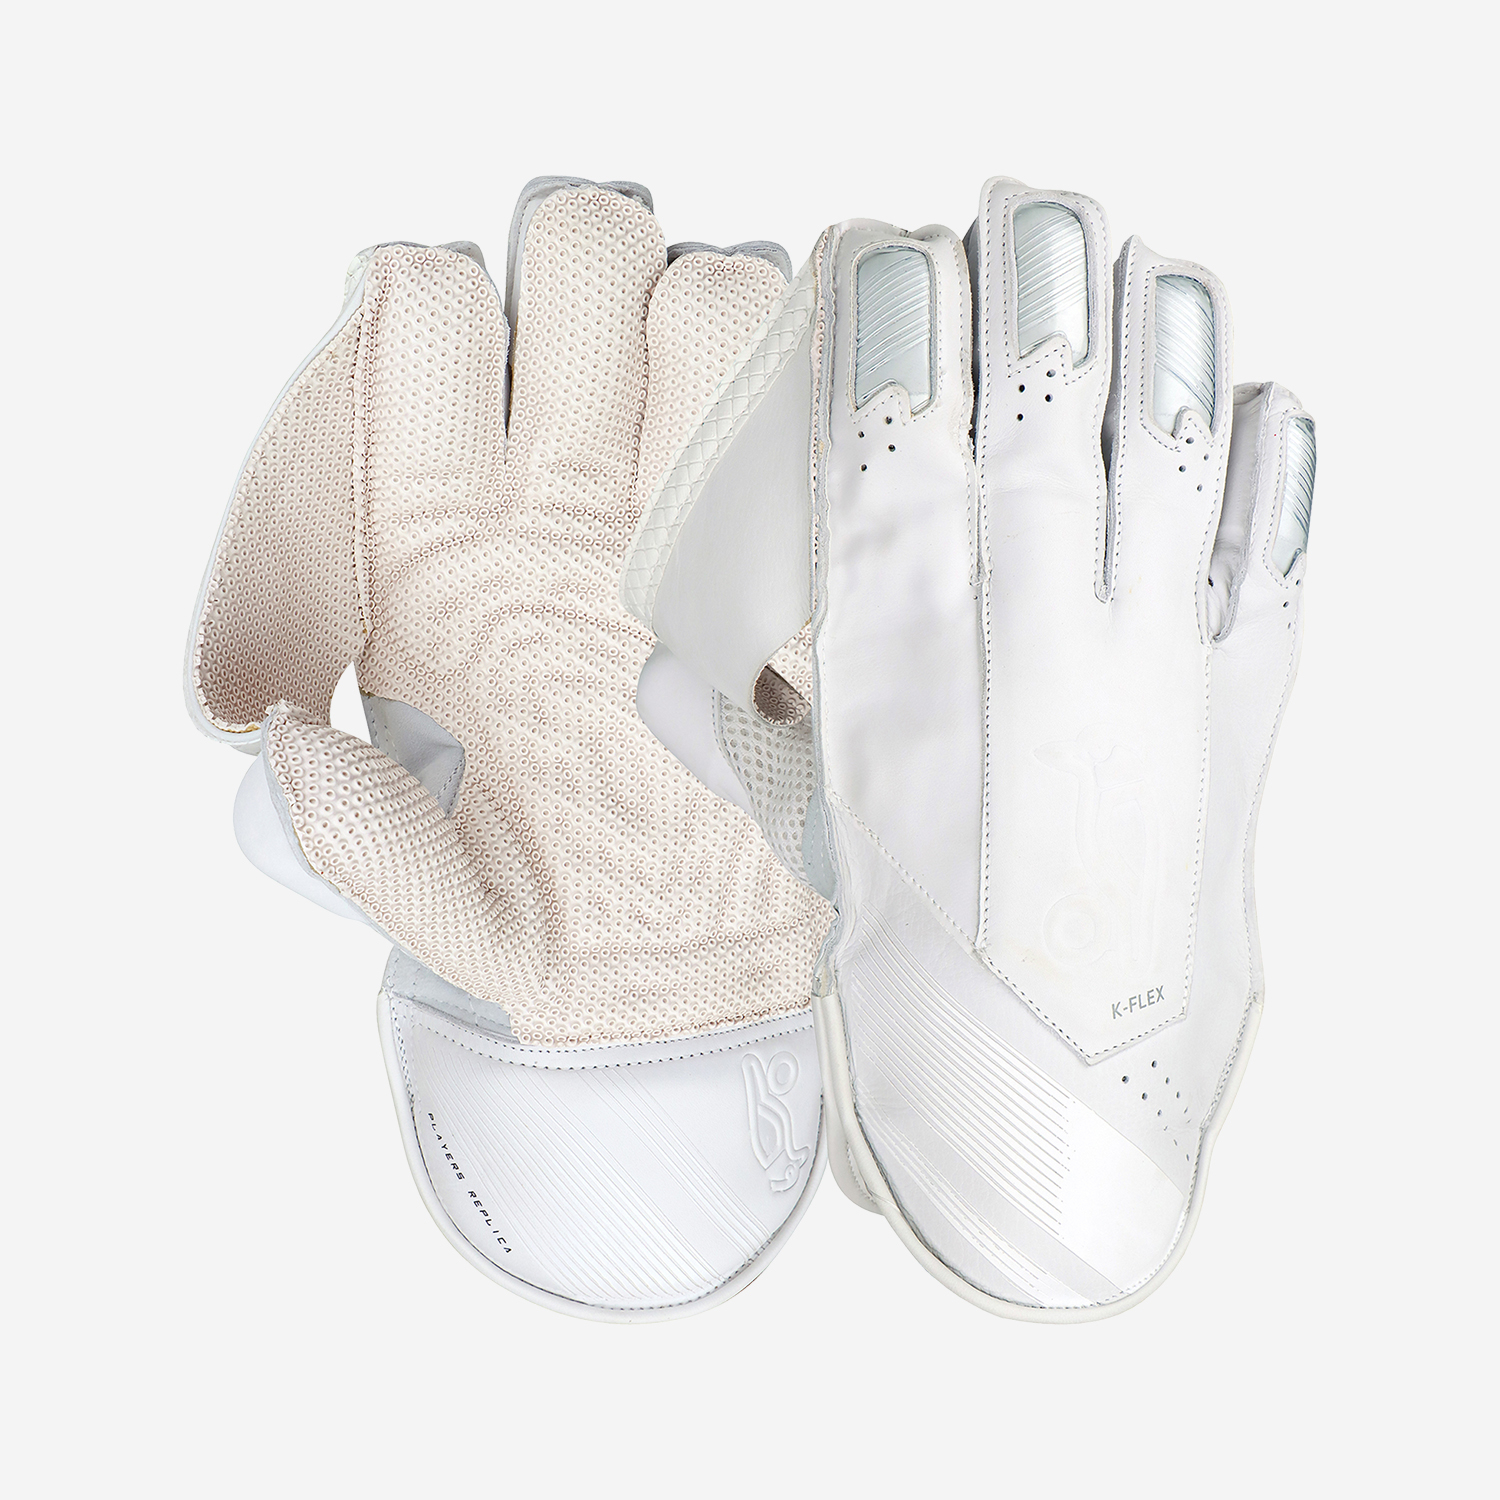 Kookaburra Pro Players Replica Wicketkeeping Gloves 3J13190